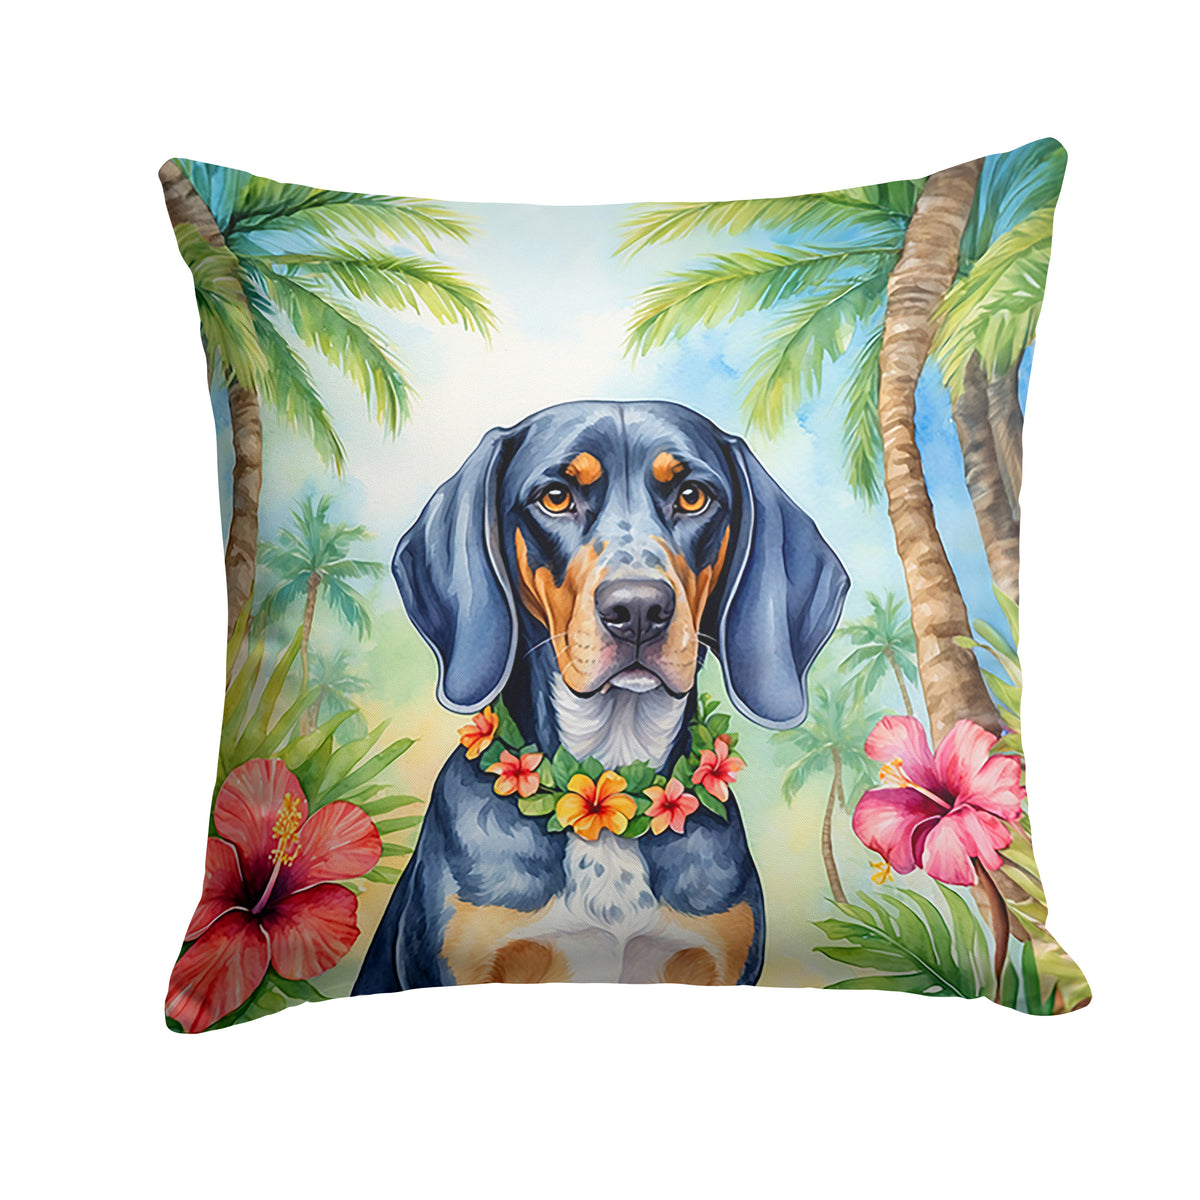 Buy this Bluetick Coonhound Luau Throw Pillow